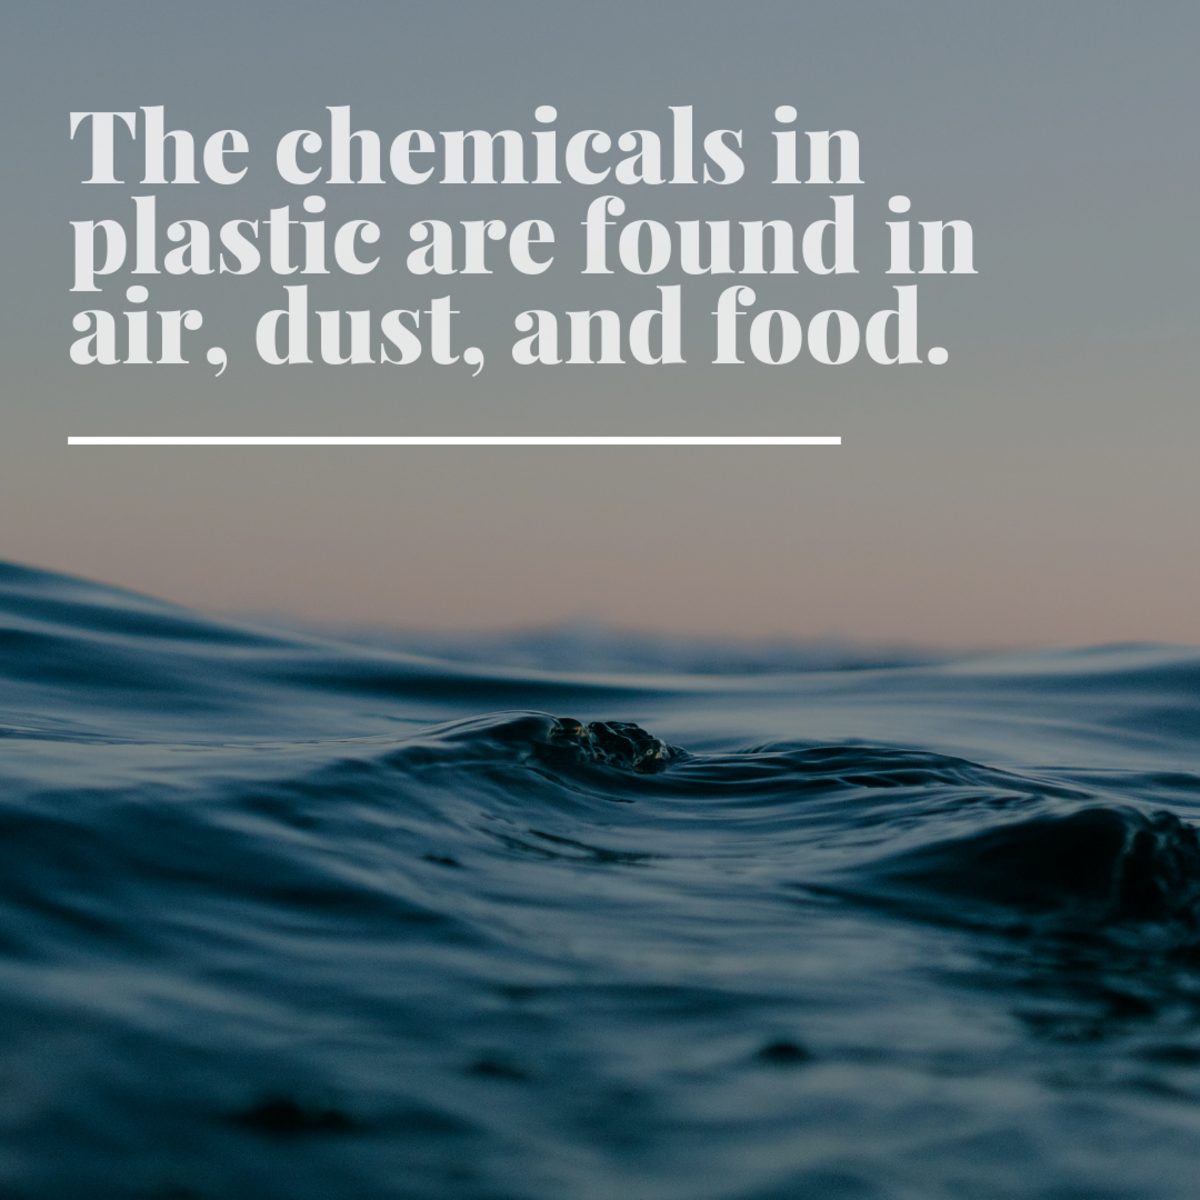 Plastic straws take over 200 years to biodegrade.